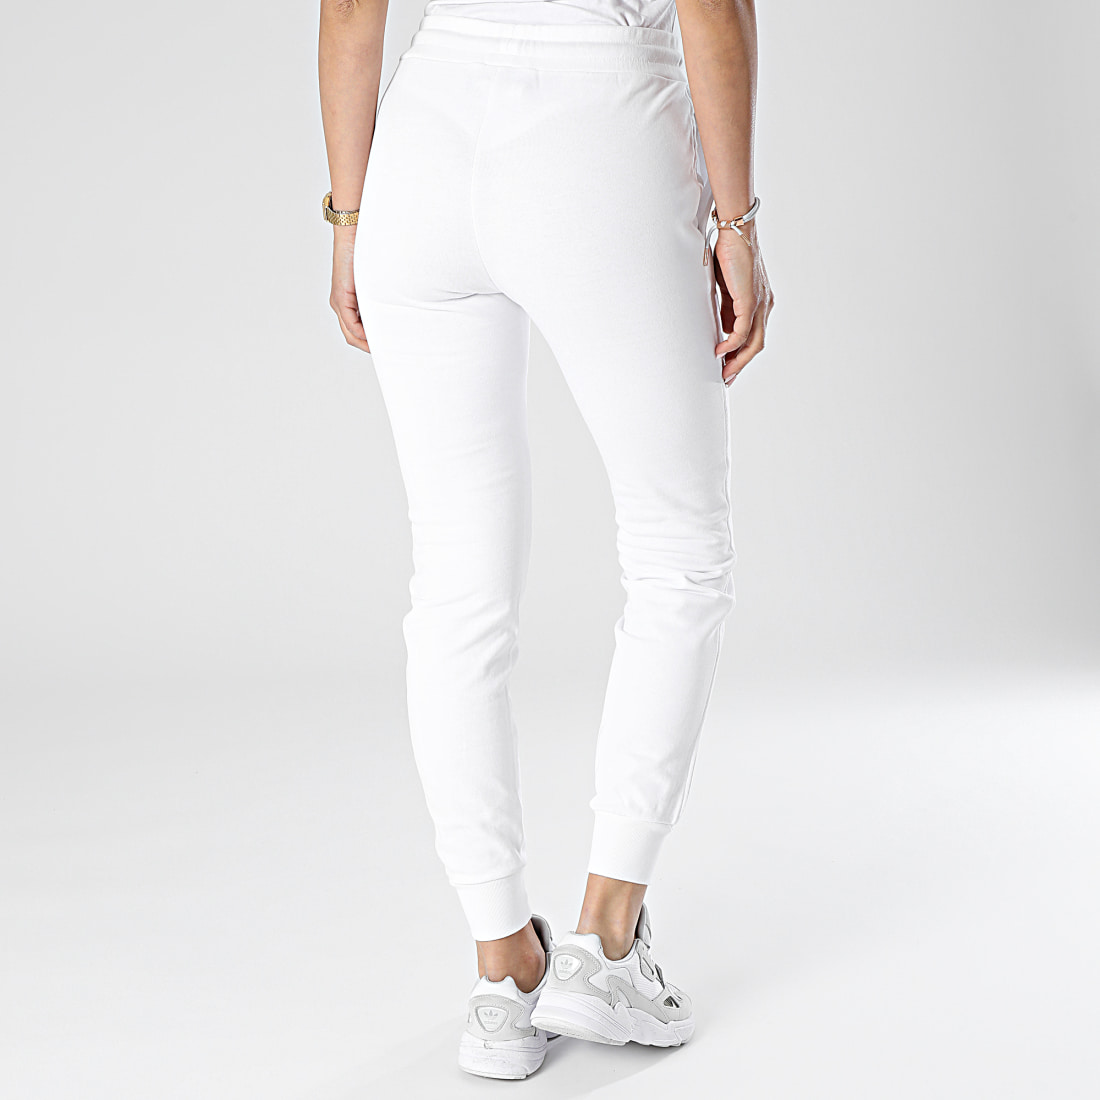 Pantalon jogging blanc femme - DistriCenter